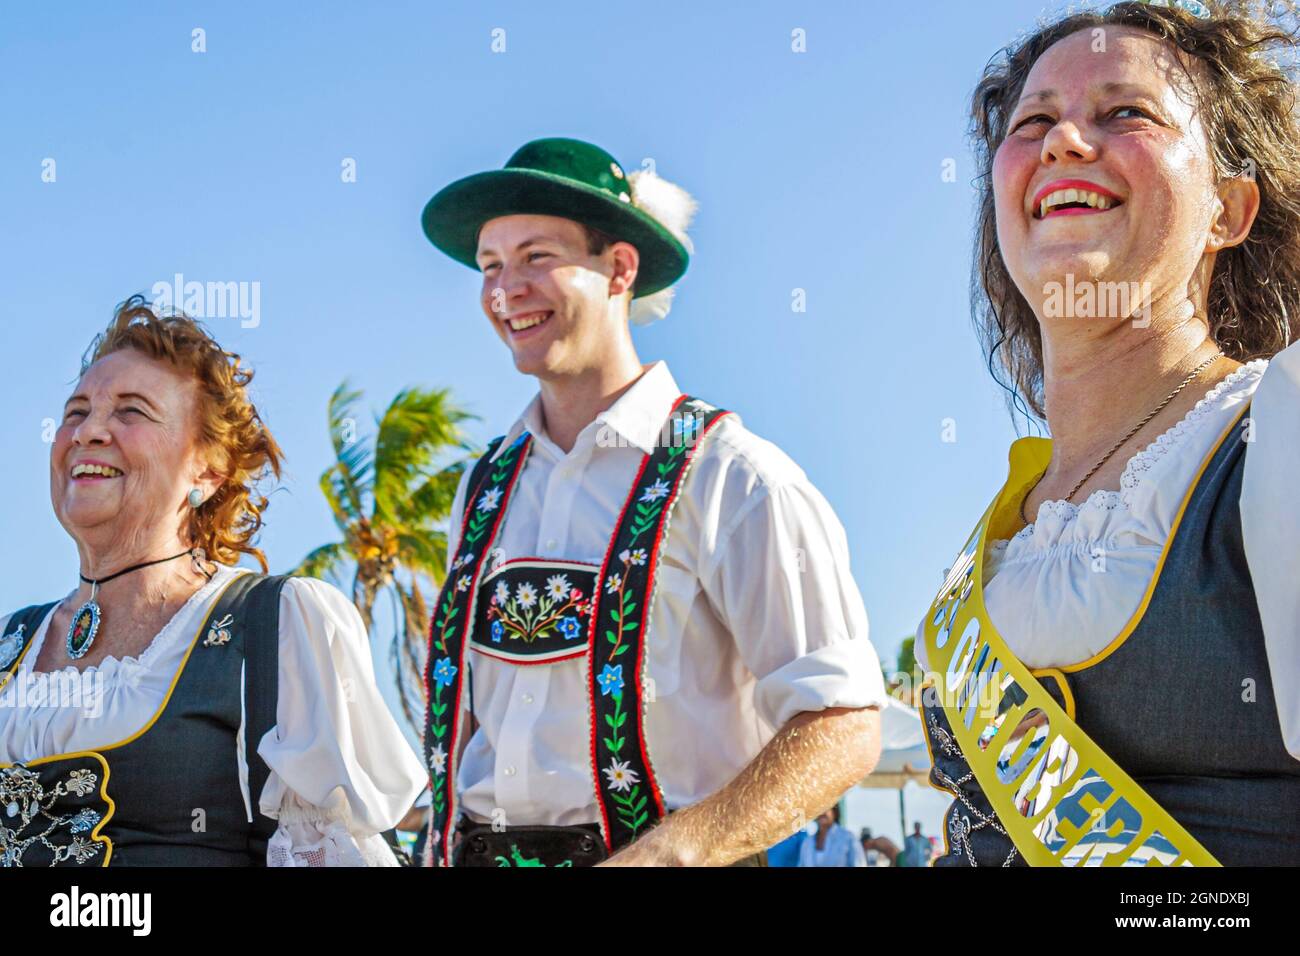 Hollywood Beach Florida, Oktoberfest festival culturale tedesco ballerini, uomo donne sorridenti abiti costumi tracht dirndl abiti lederhosen shorts Foto Stock